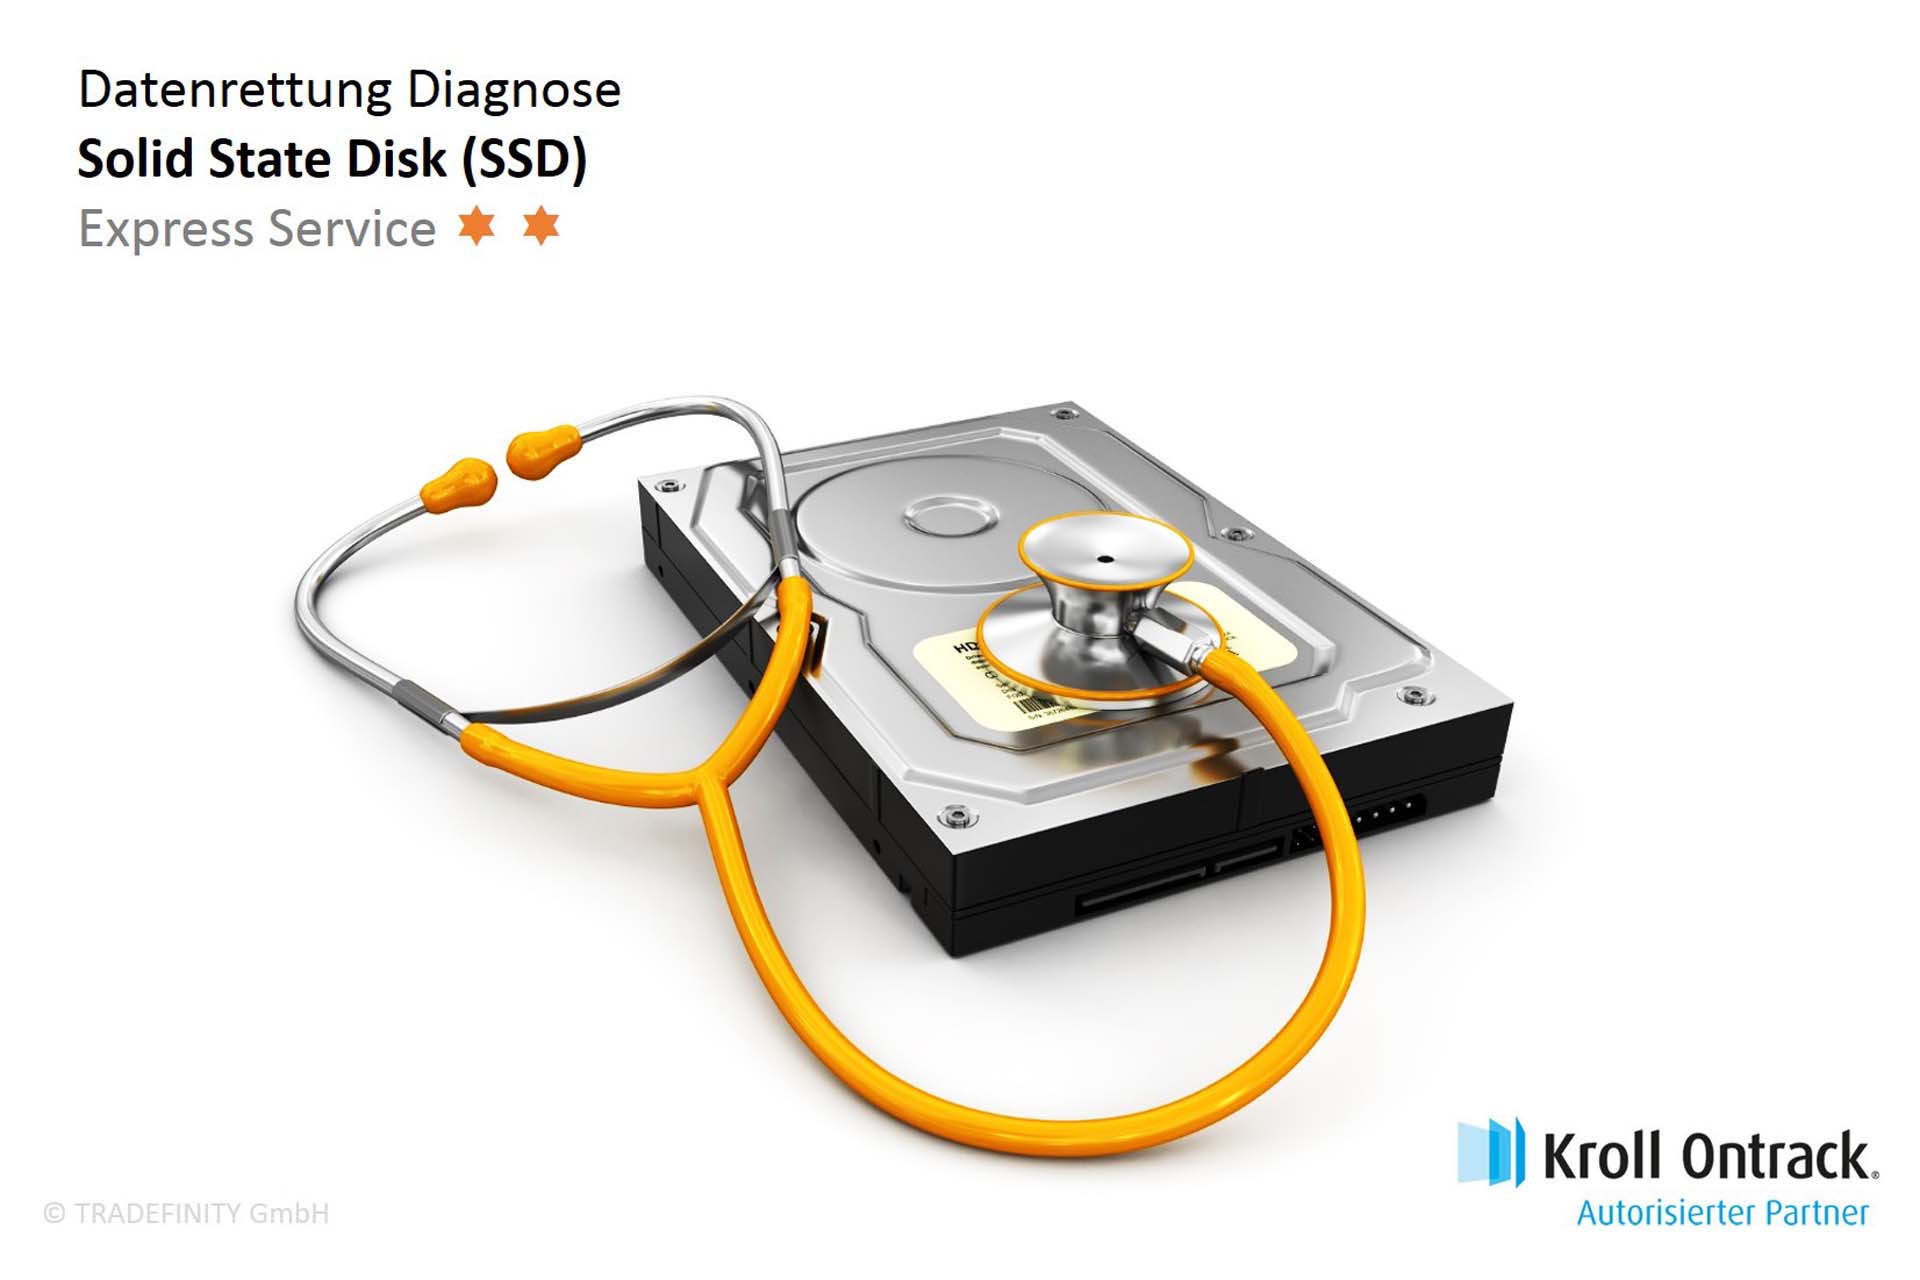 Datenrettung Diagnose (Express Service) von SSD